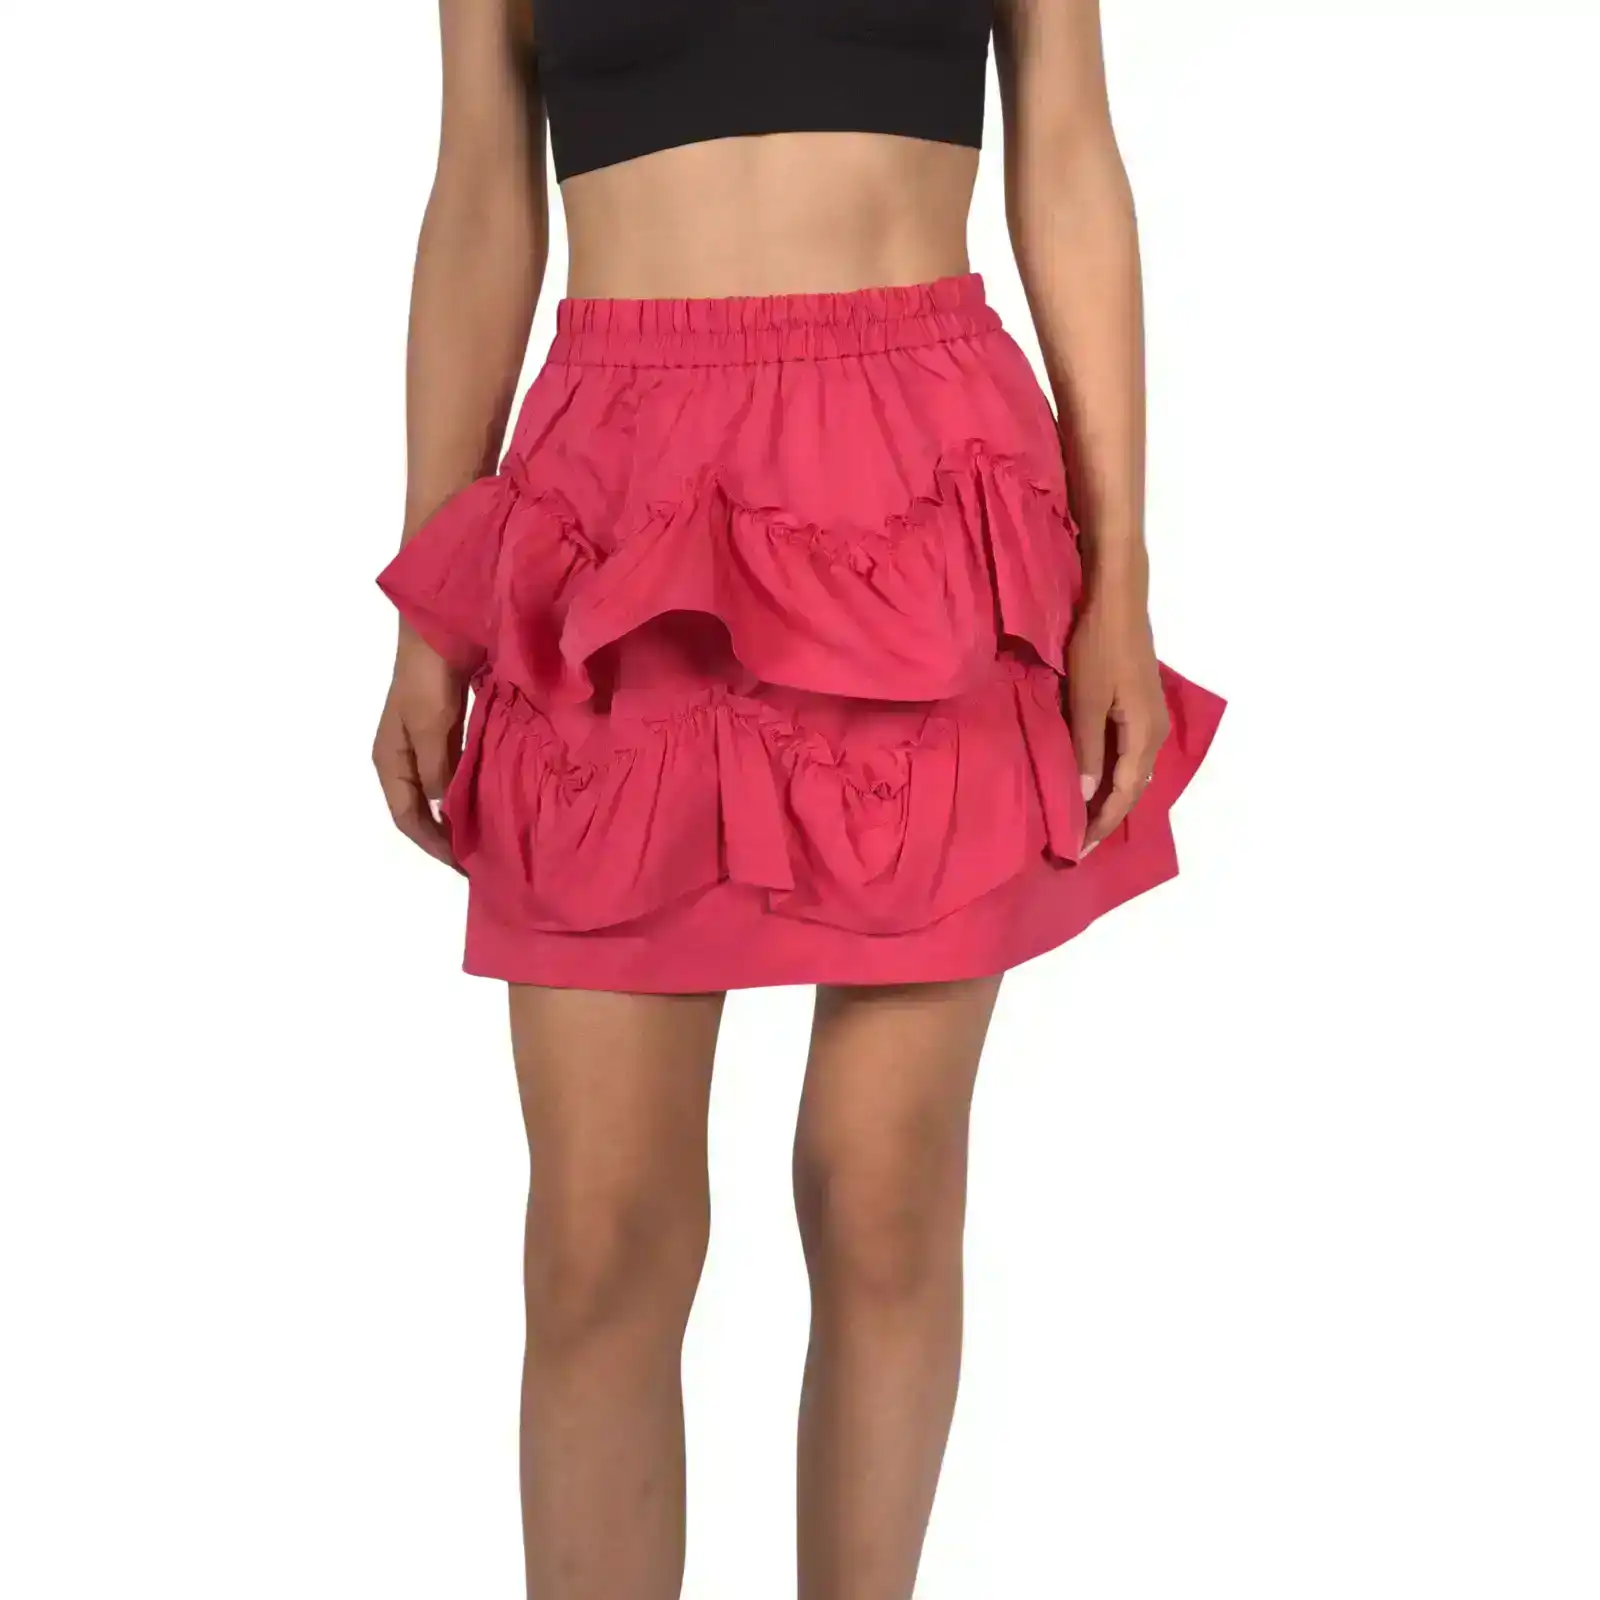 Topshop Women's Taffeta Ruffle Mini Skirt - Pink